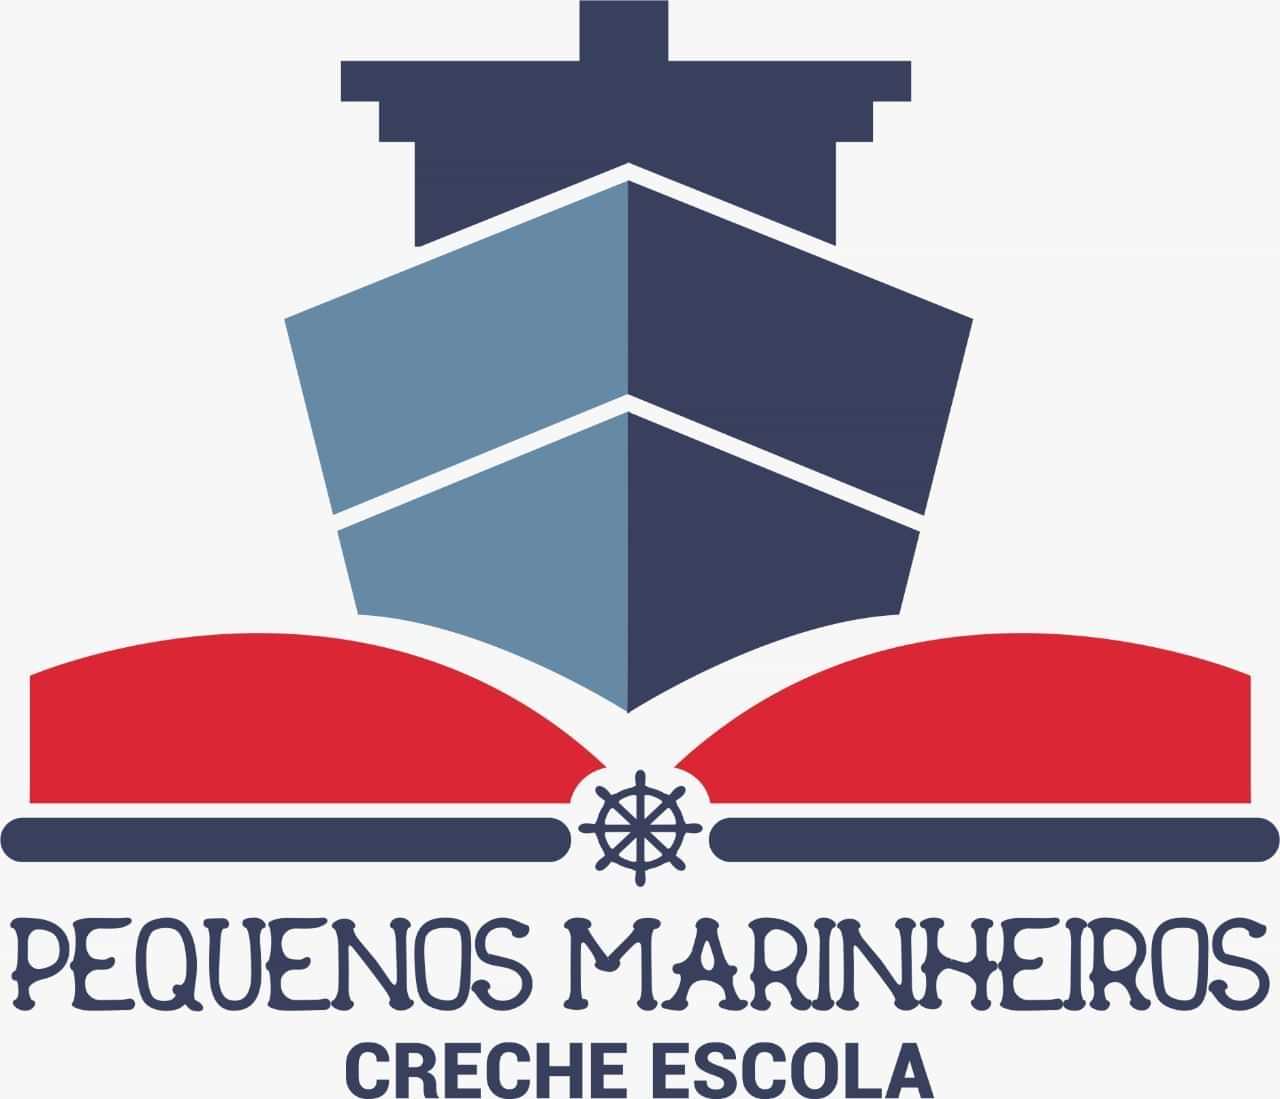  Centro Educacional Pequenos Marinheiros 